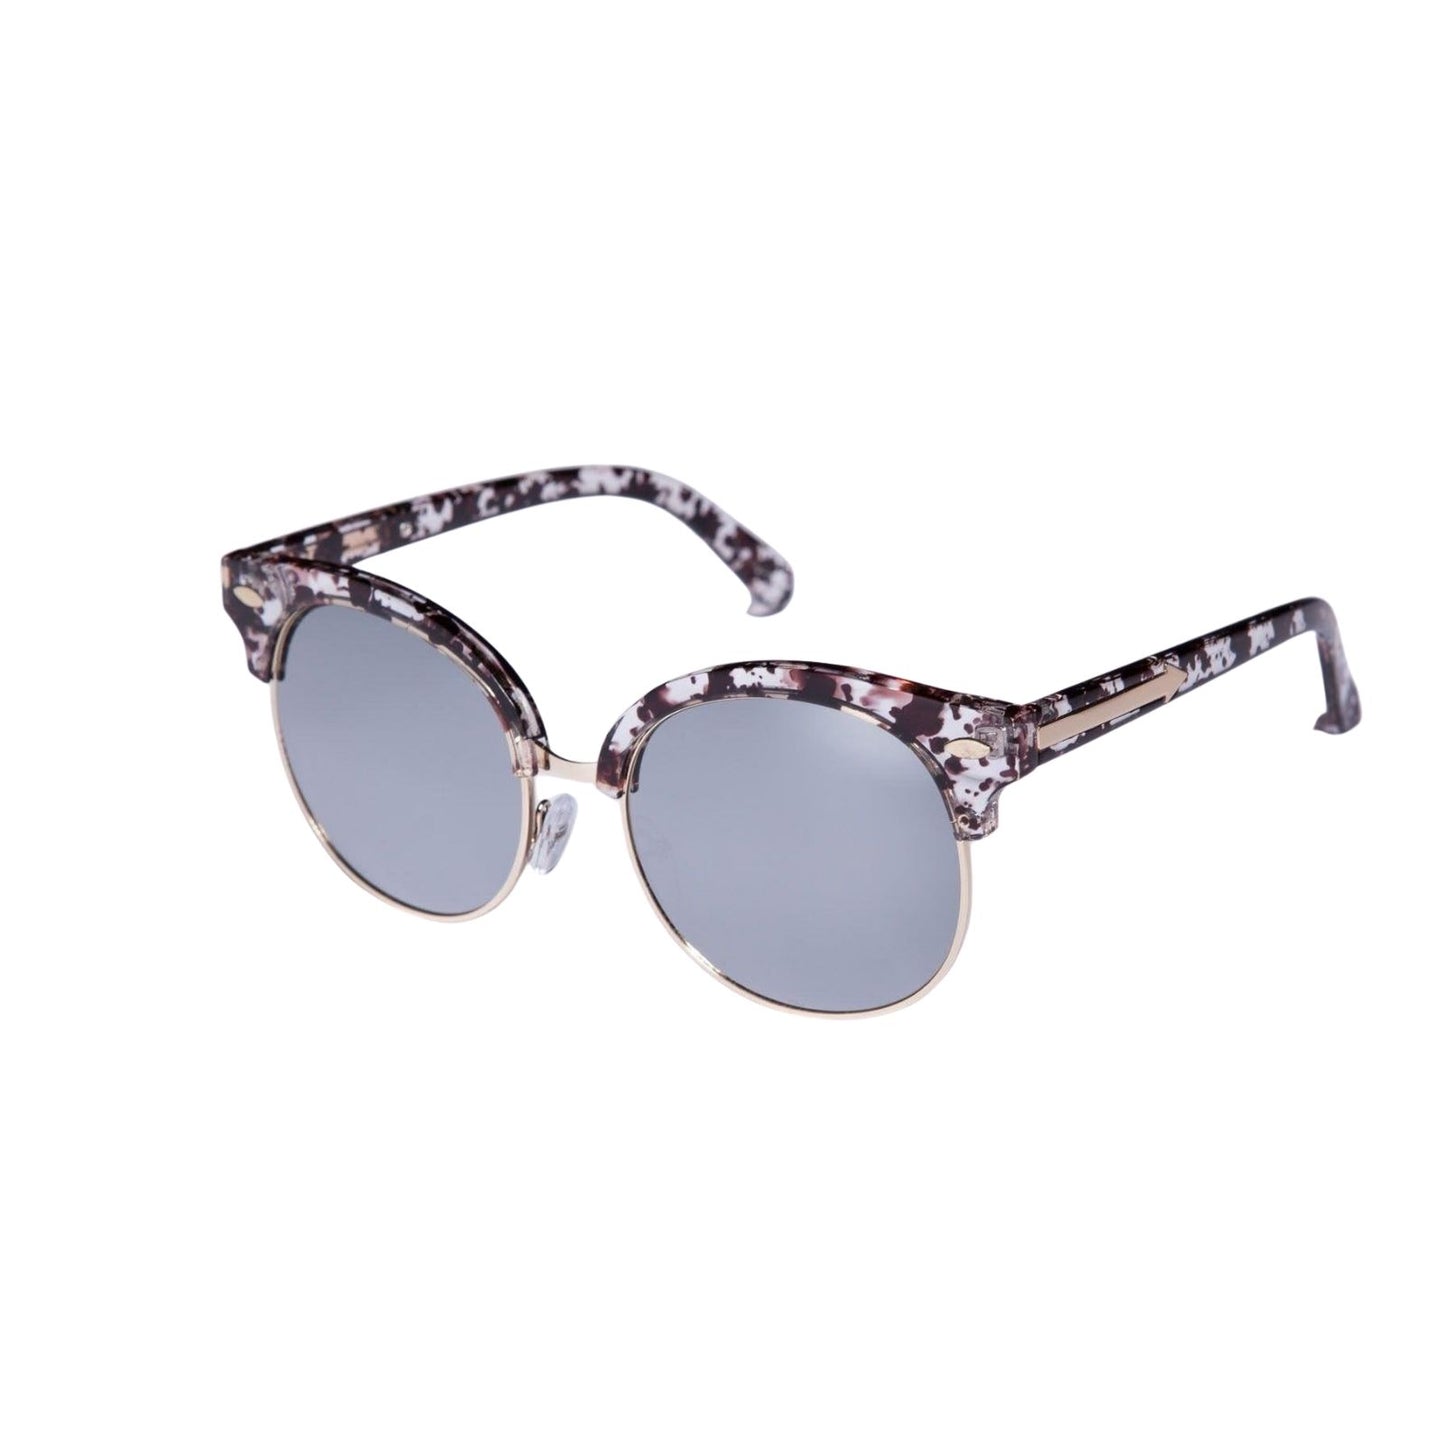 Women White Tortoiseshell Frame Grey Reflective Tinted Lens Sunglasses UV 400 - Pantsnsox